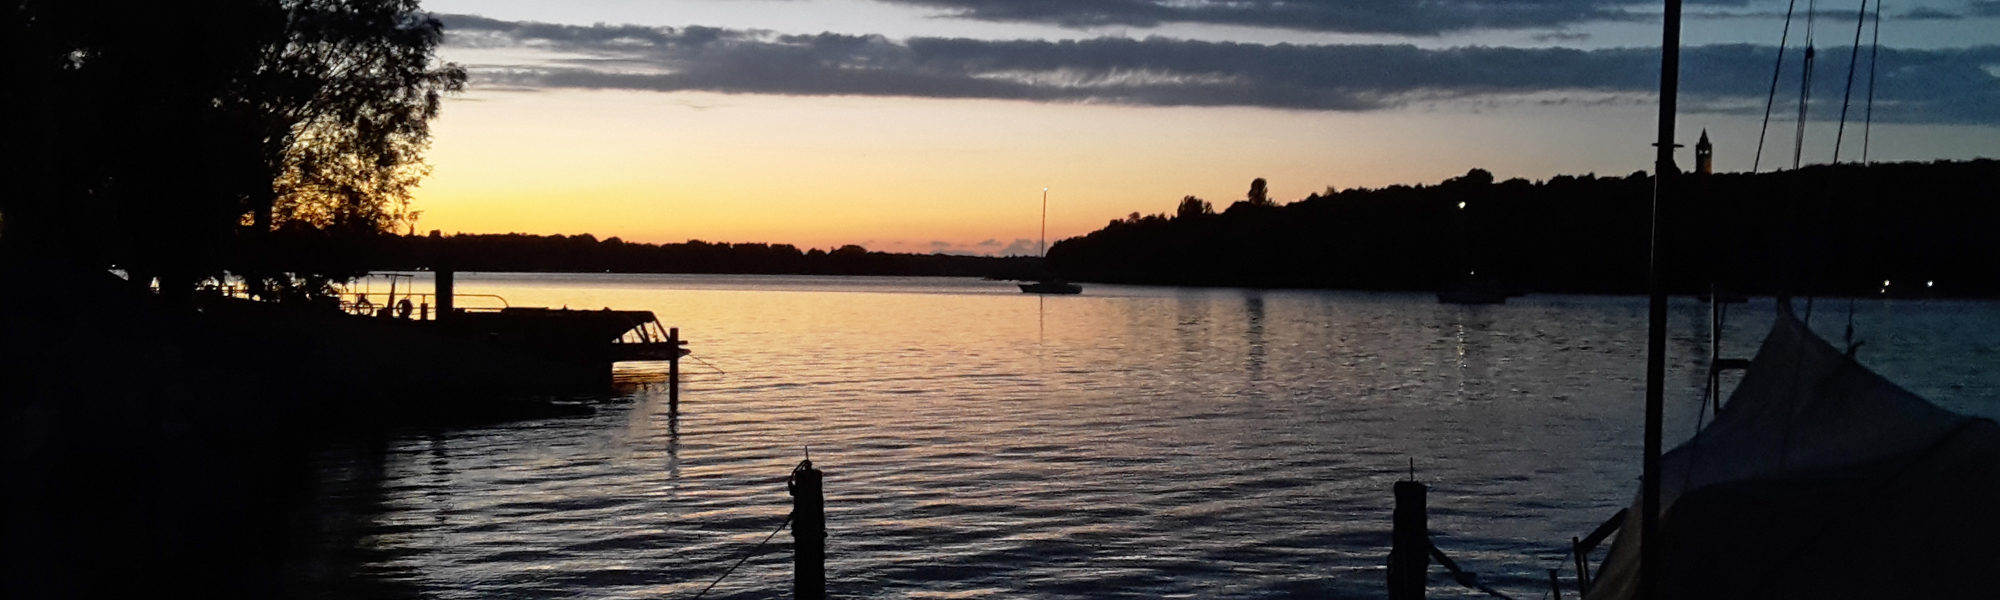 Sonnenuntergang in der Lieper Bucht